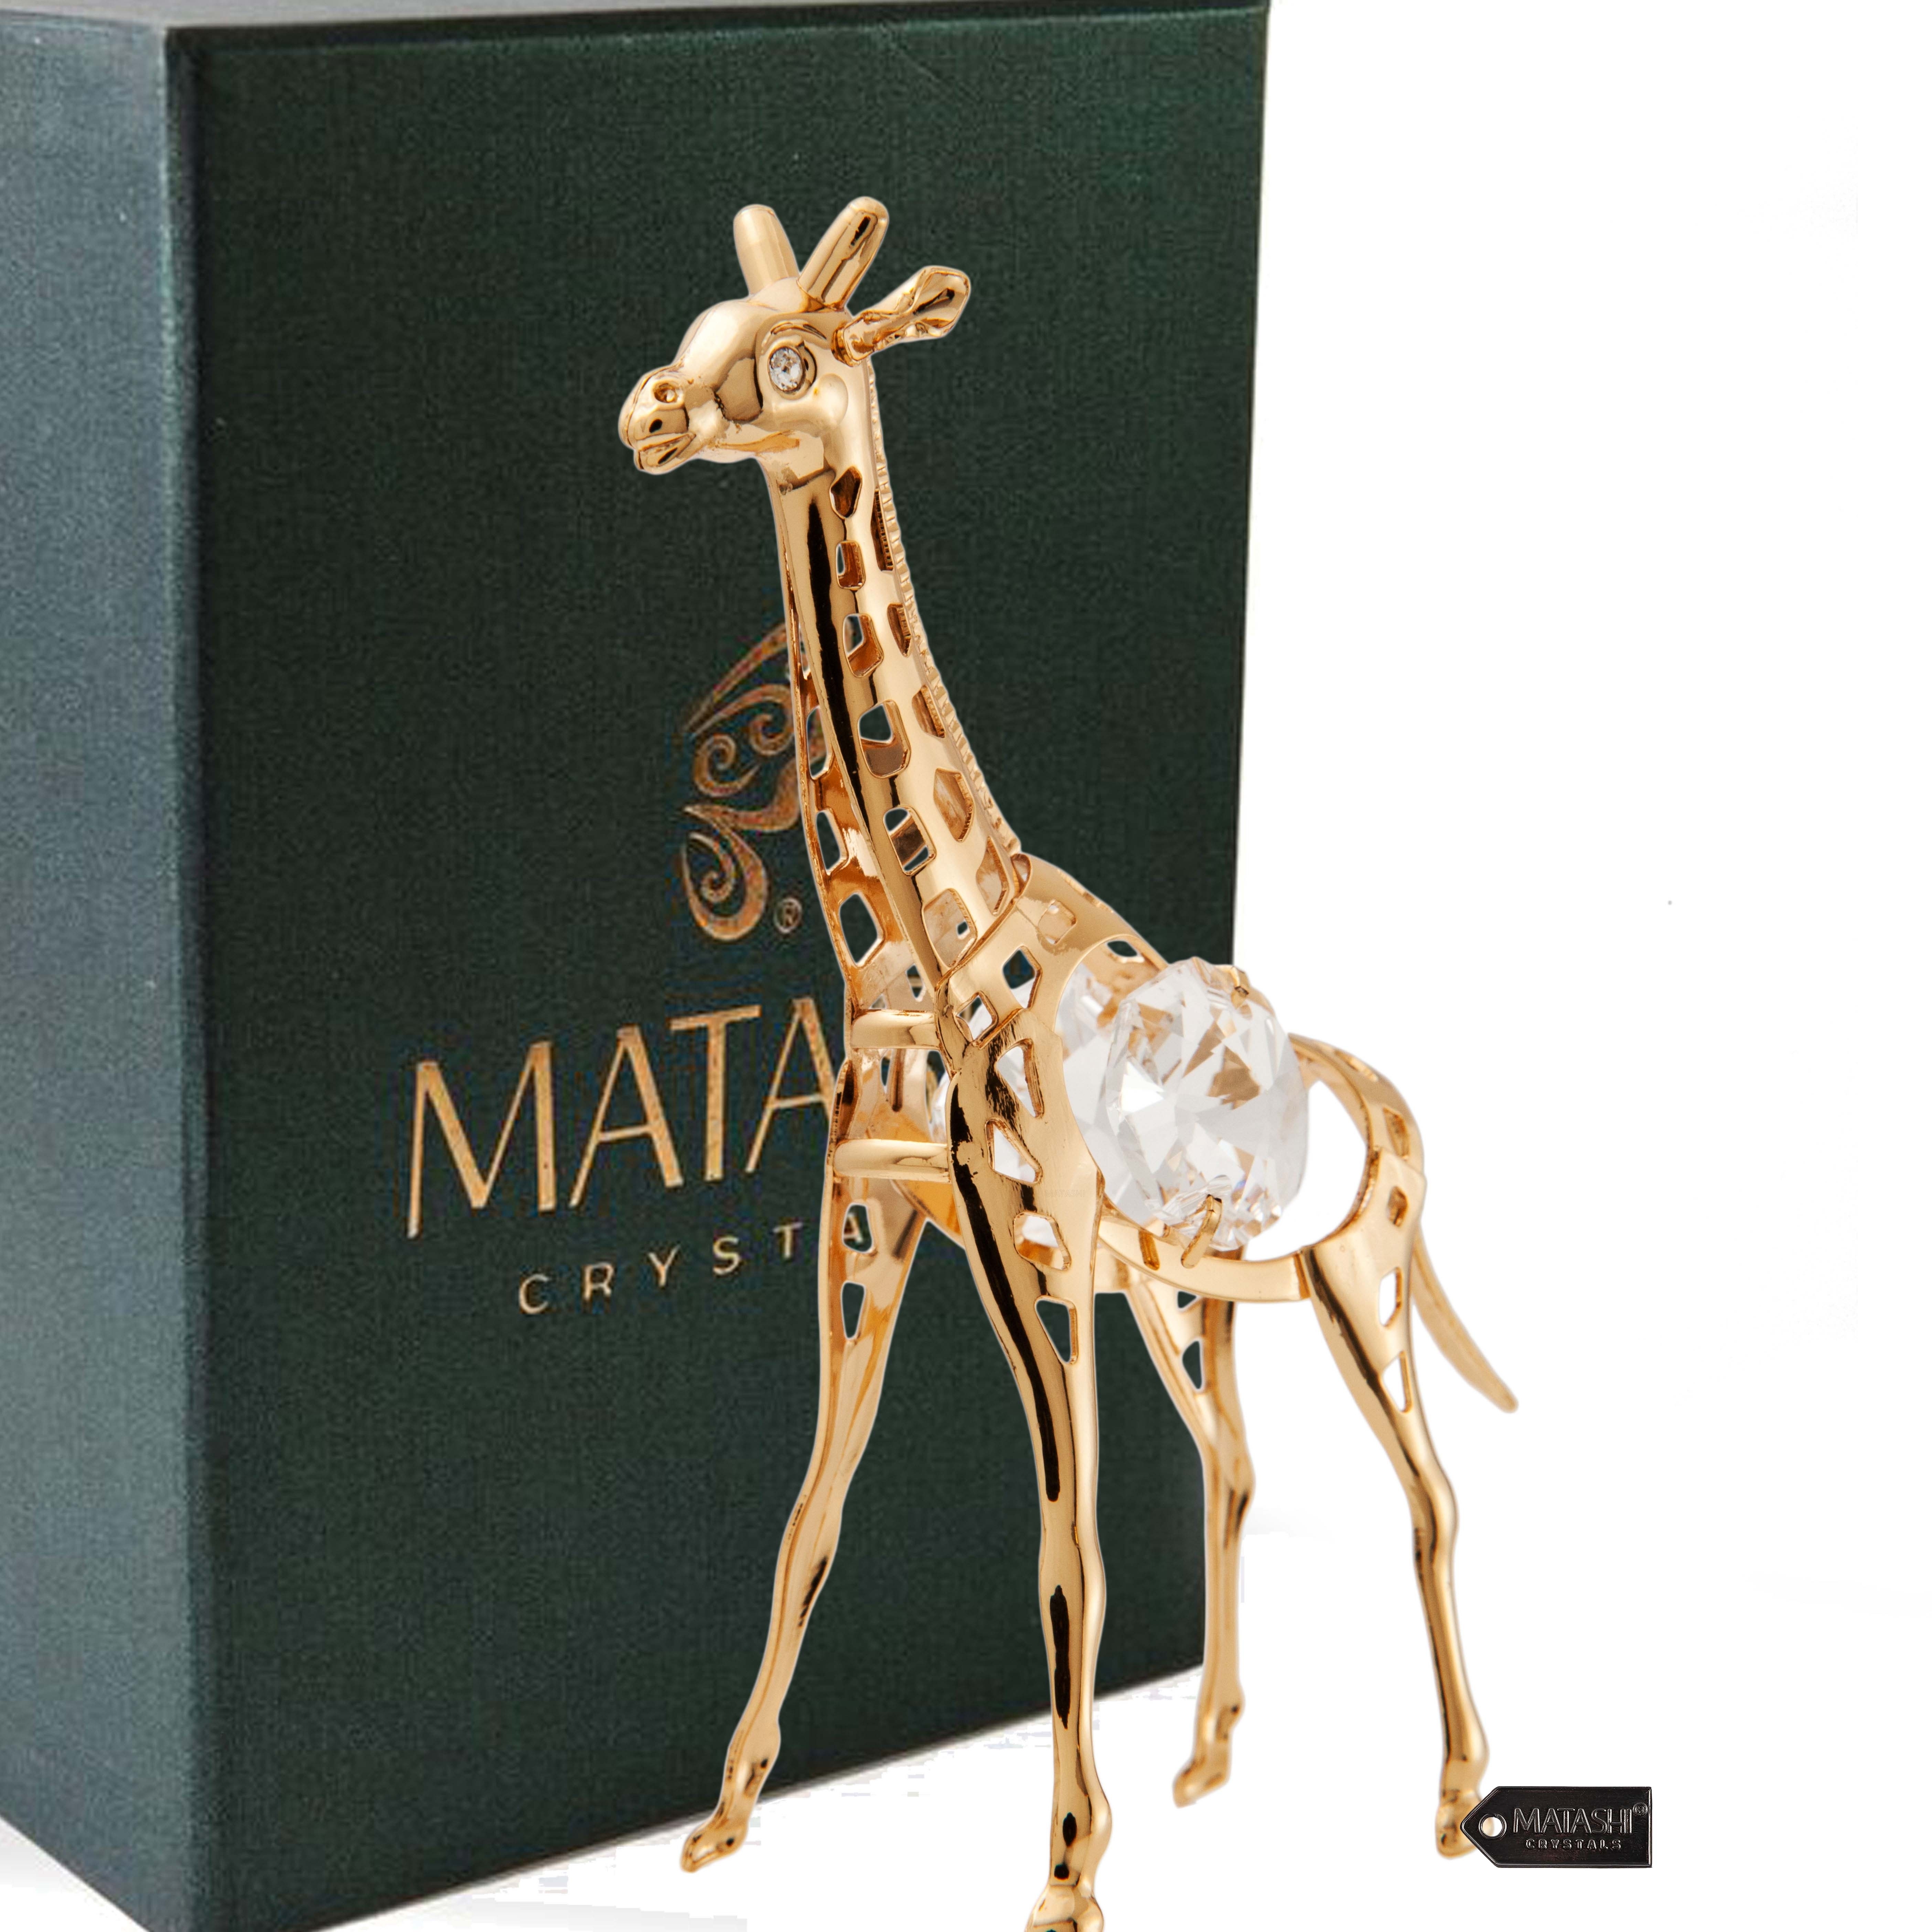 Matashi 24K Gold Plated Crystal Studded Gold Giraffe Ornament Tabletop Home Decor Showpiece Gift For Christmas Birthday Valentine's Day